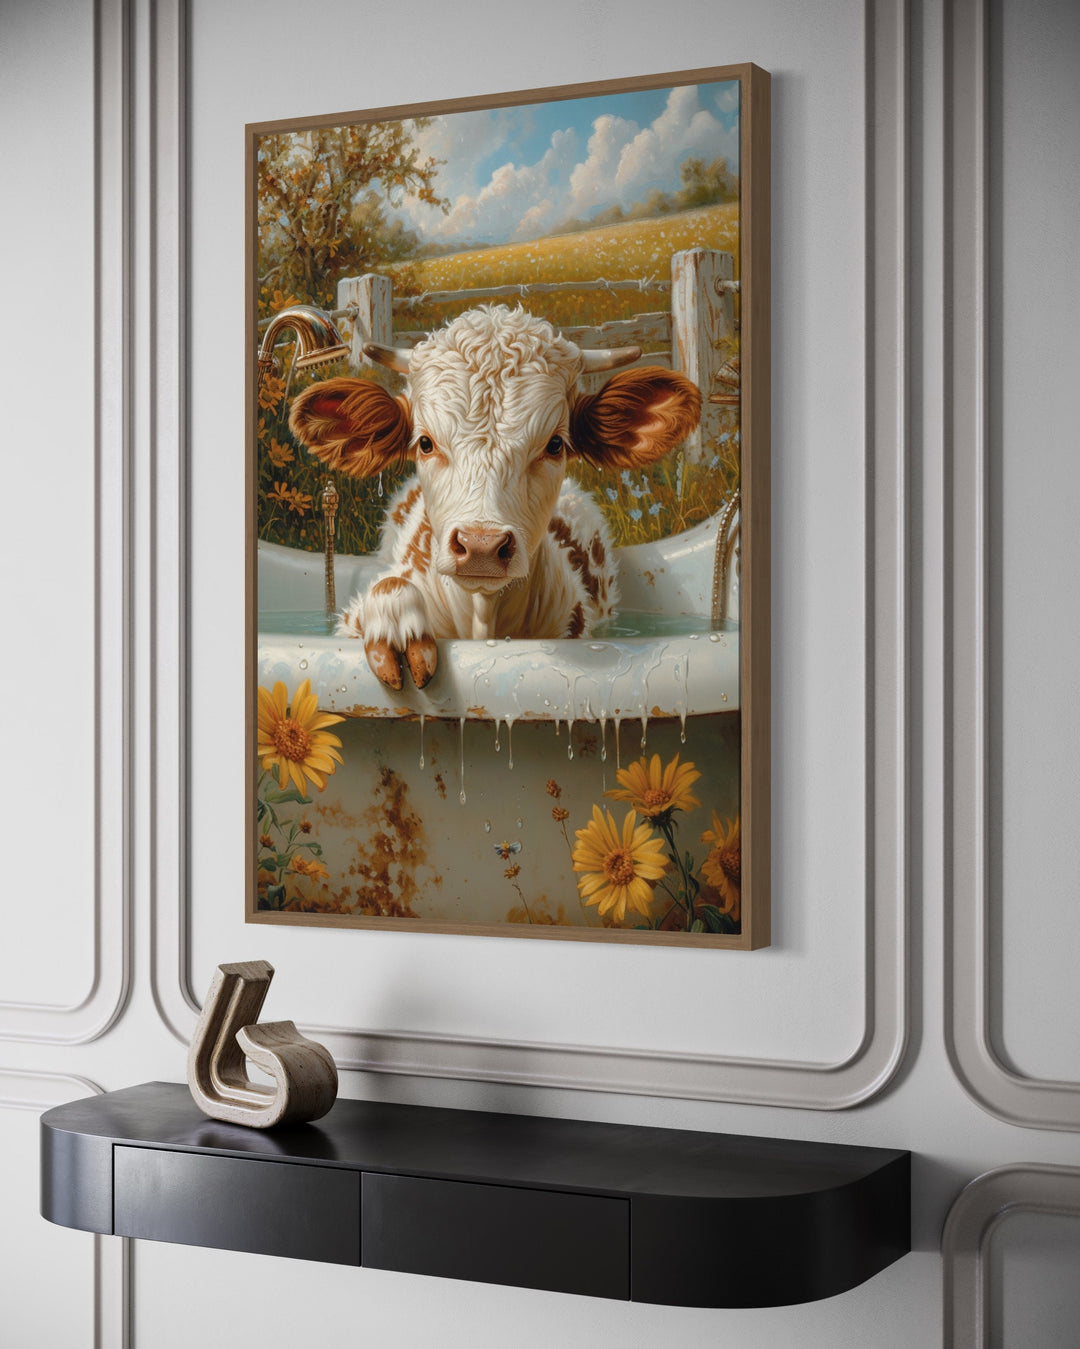 Baby Highland Cow In The Bathtub Framed Canvas Wall Art